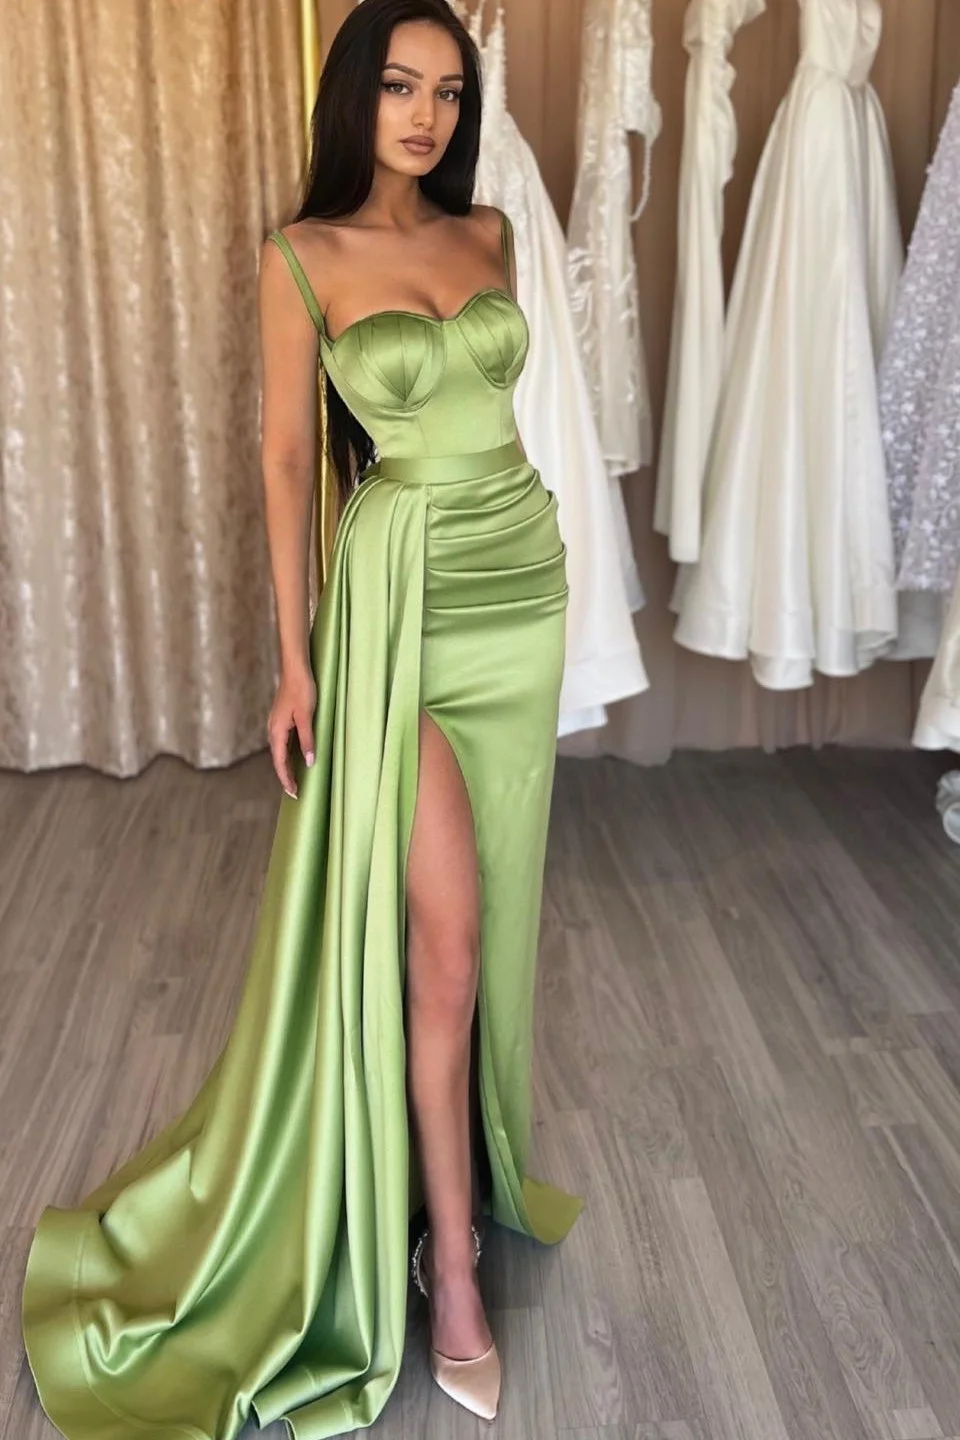 Luluslly Sage Green Spaghetti-Strals Mermaid Prom Dress Slit With Ruffles